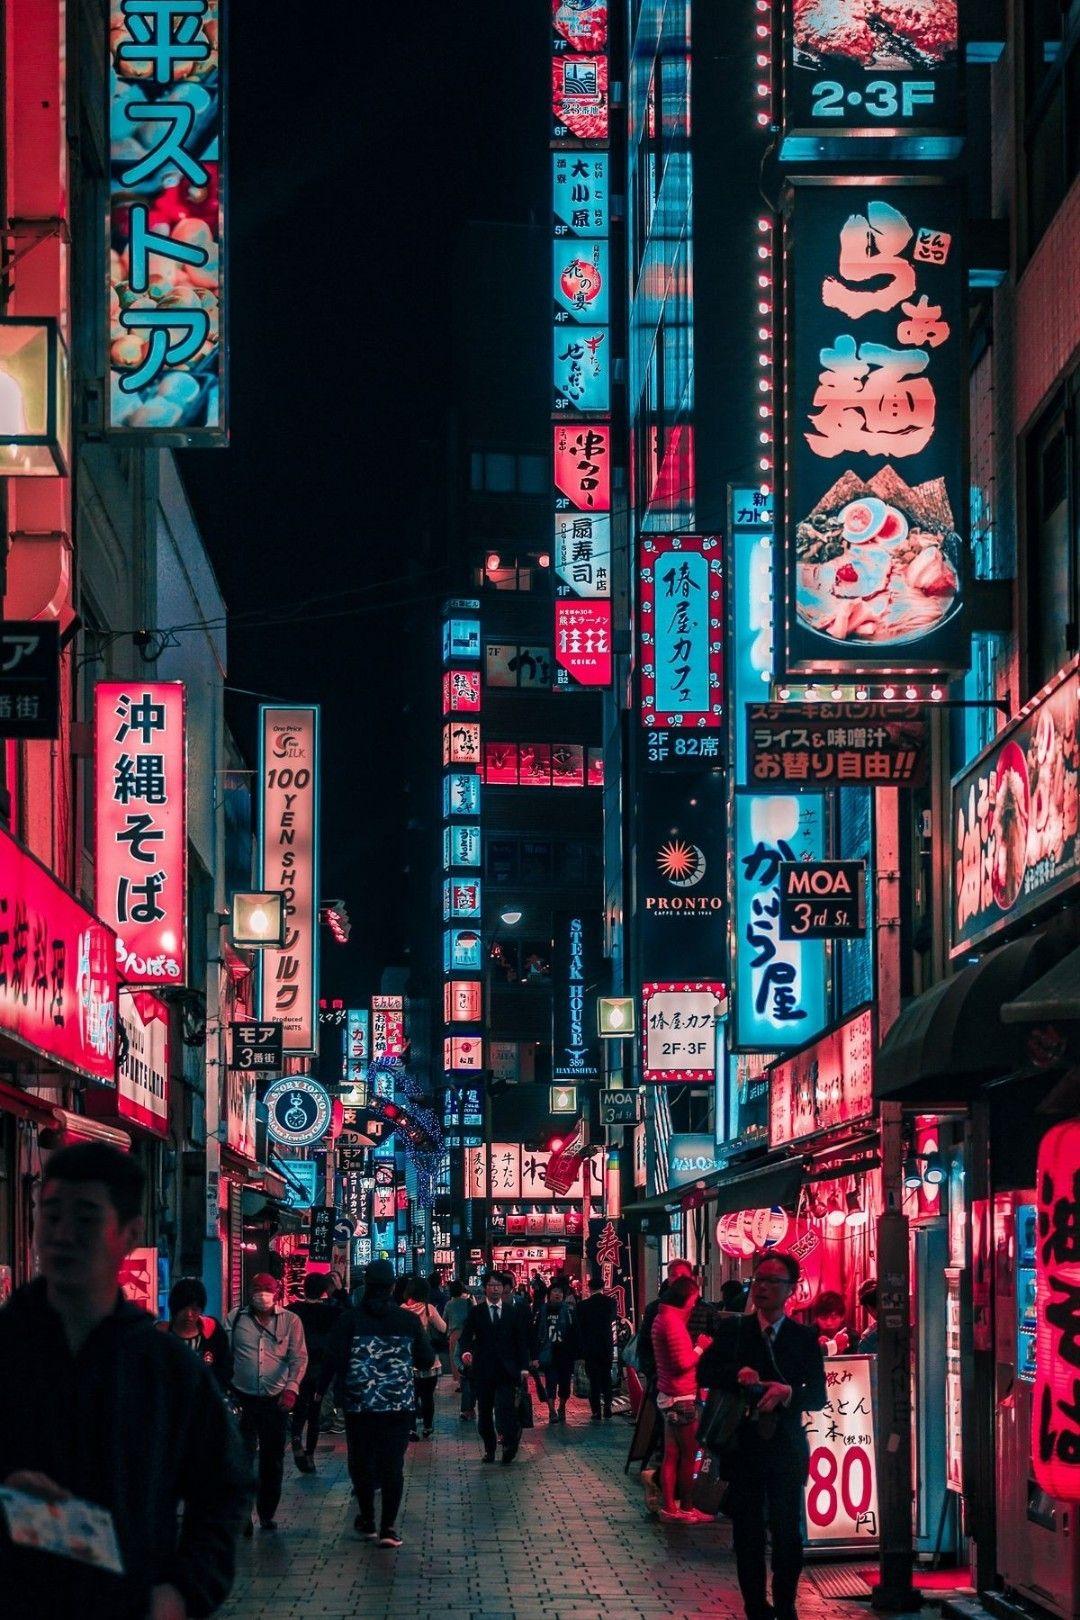 Japanese Street Night Wallpapers